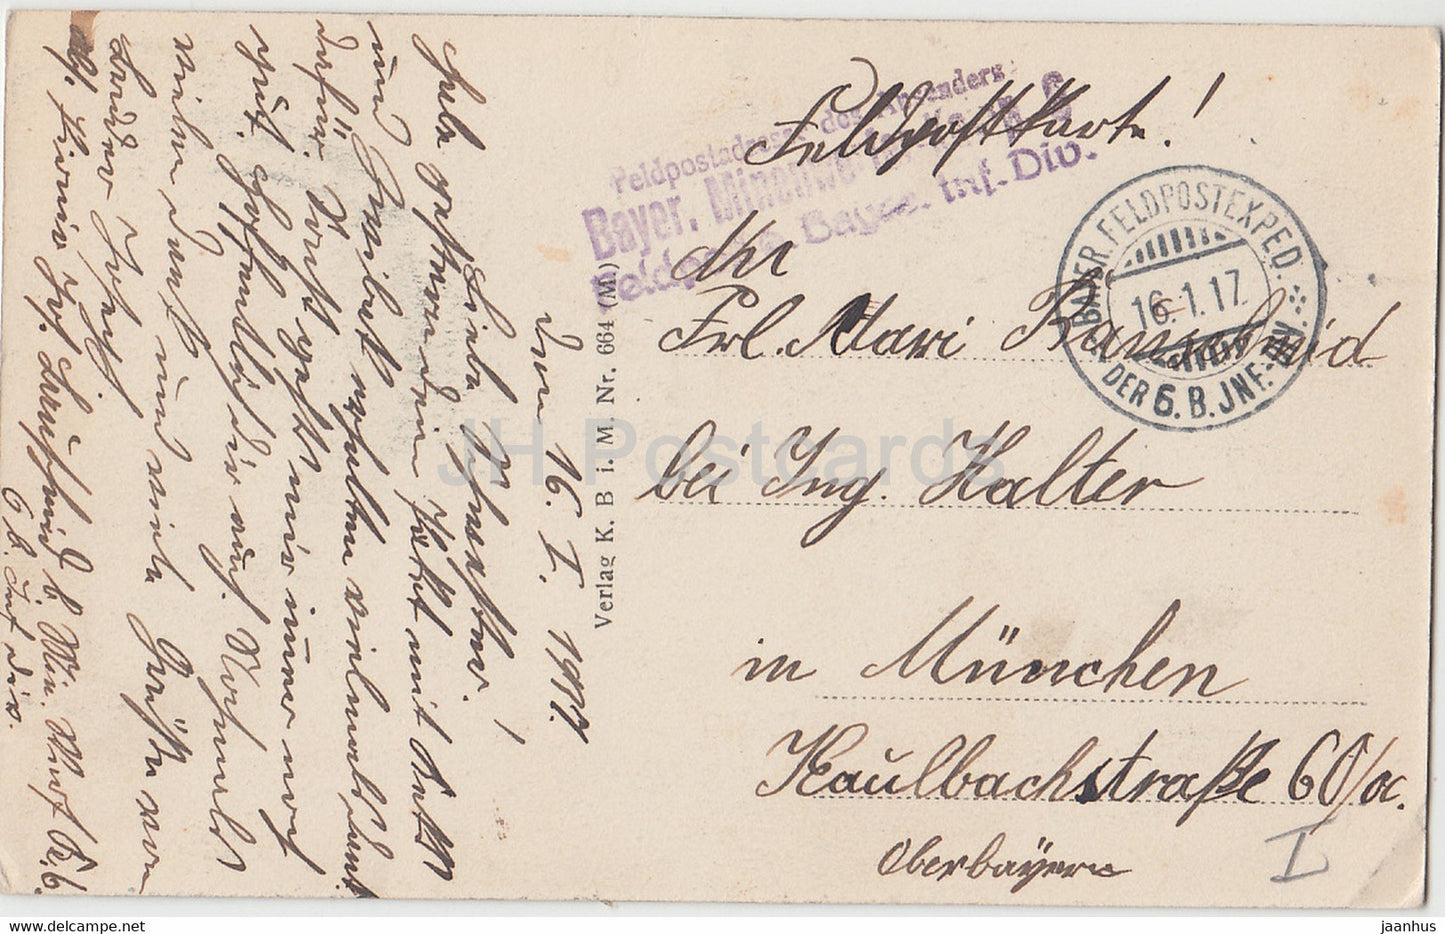 Kirche v Belloy - Bayer Minenwerfer Korp - Feldpost - alte Postkarte - 1917 - Frankreich - gebraucht